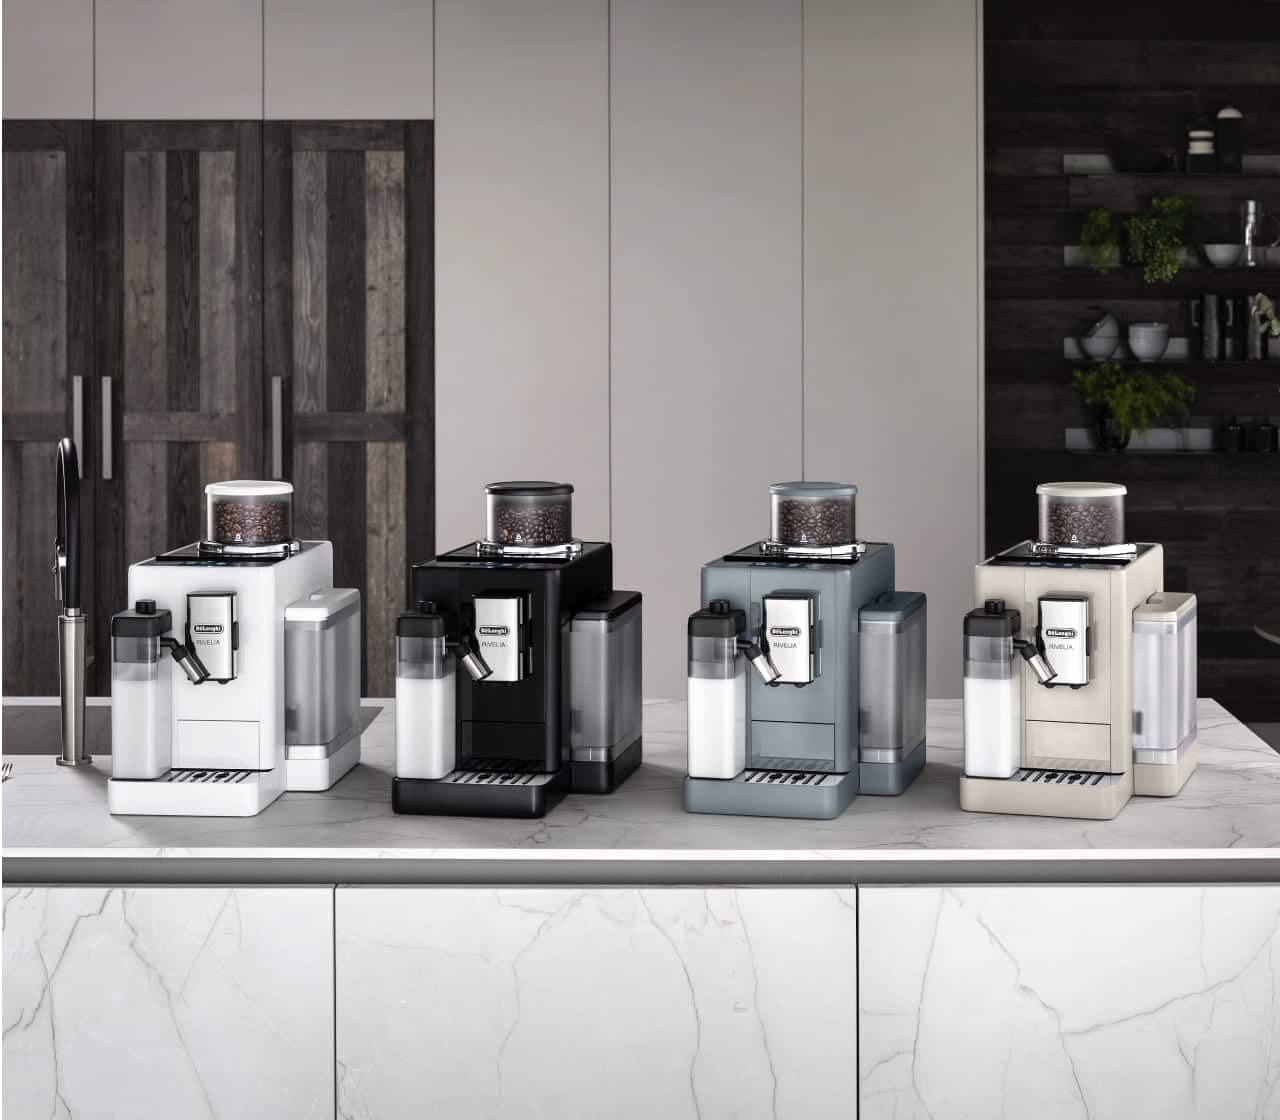 Rivelia's stylish design makes coffee smarter than ever